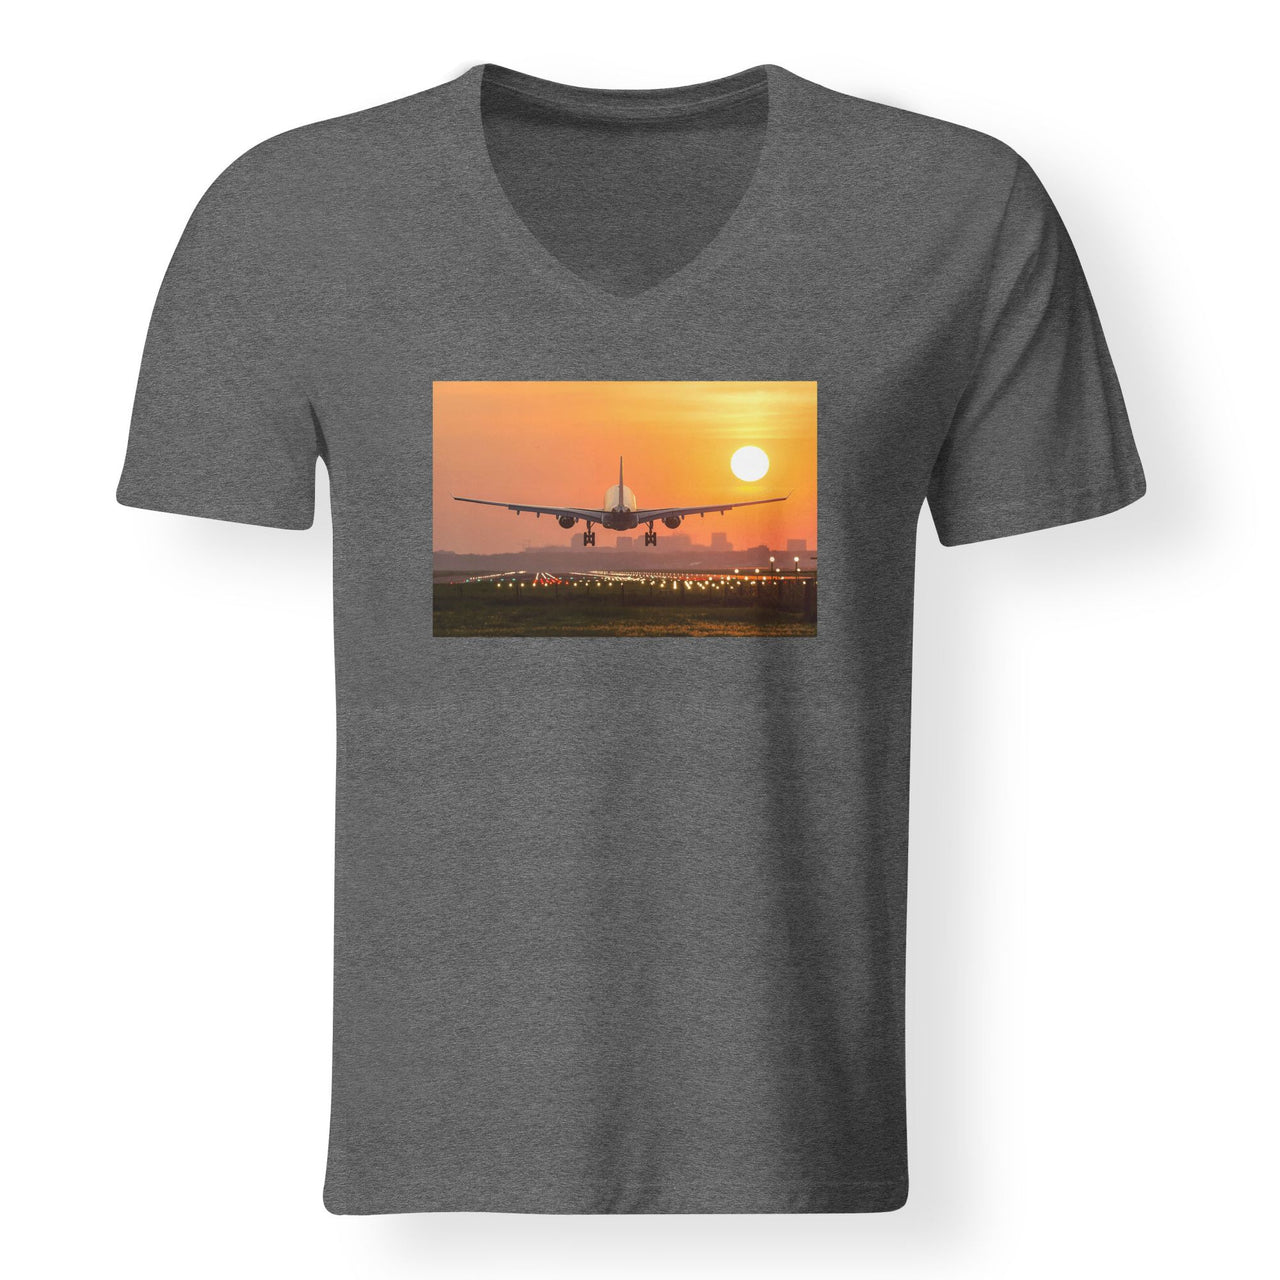 Amazing Airbus A330 Landing at Sunset Designed V-Neck T-Shirts